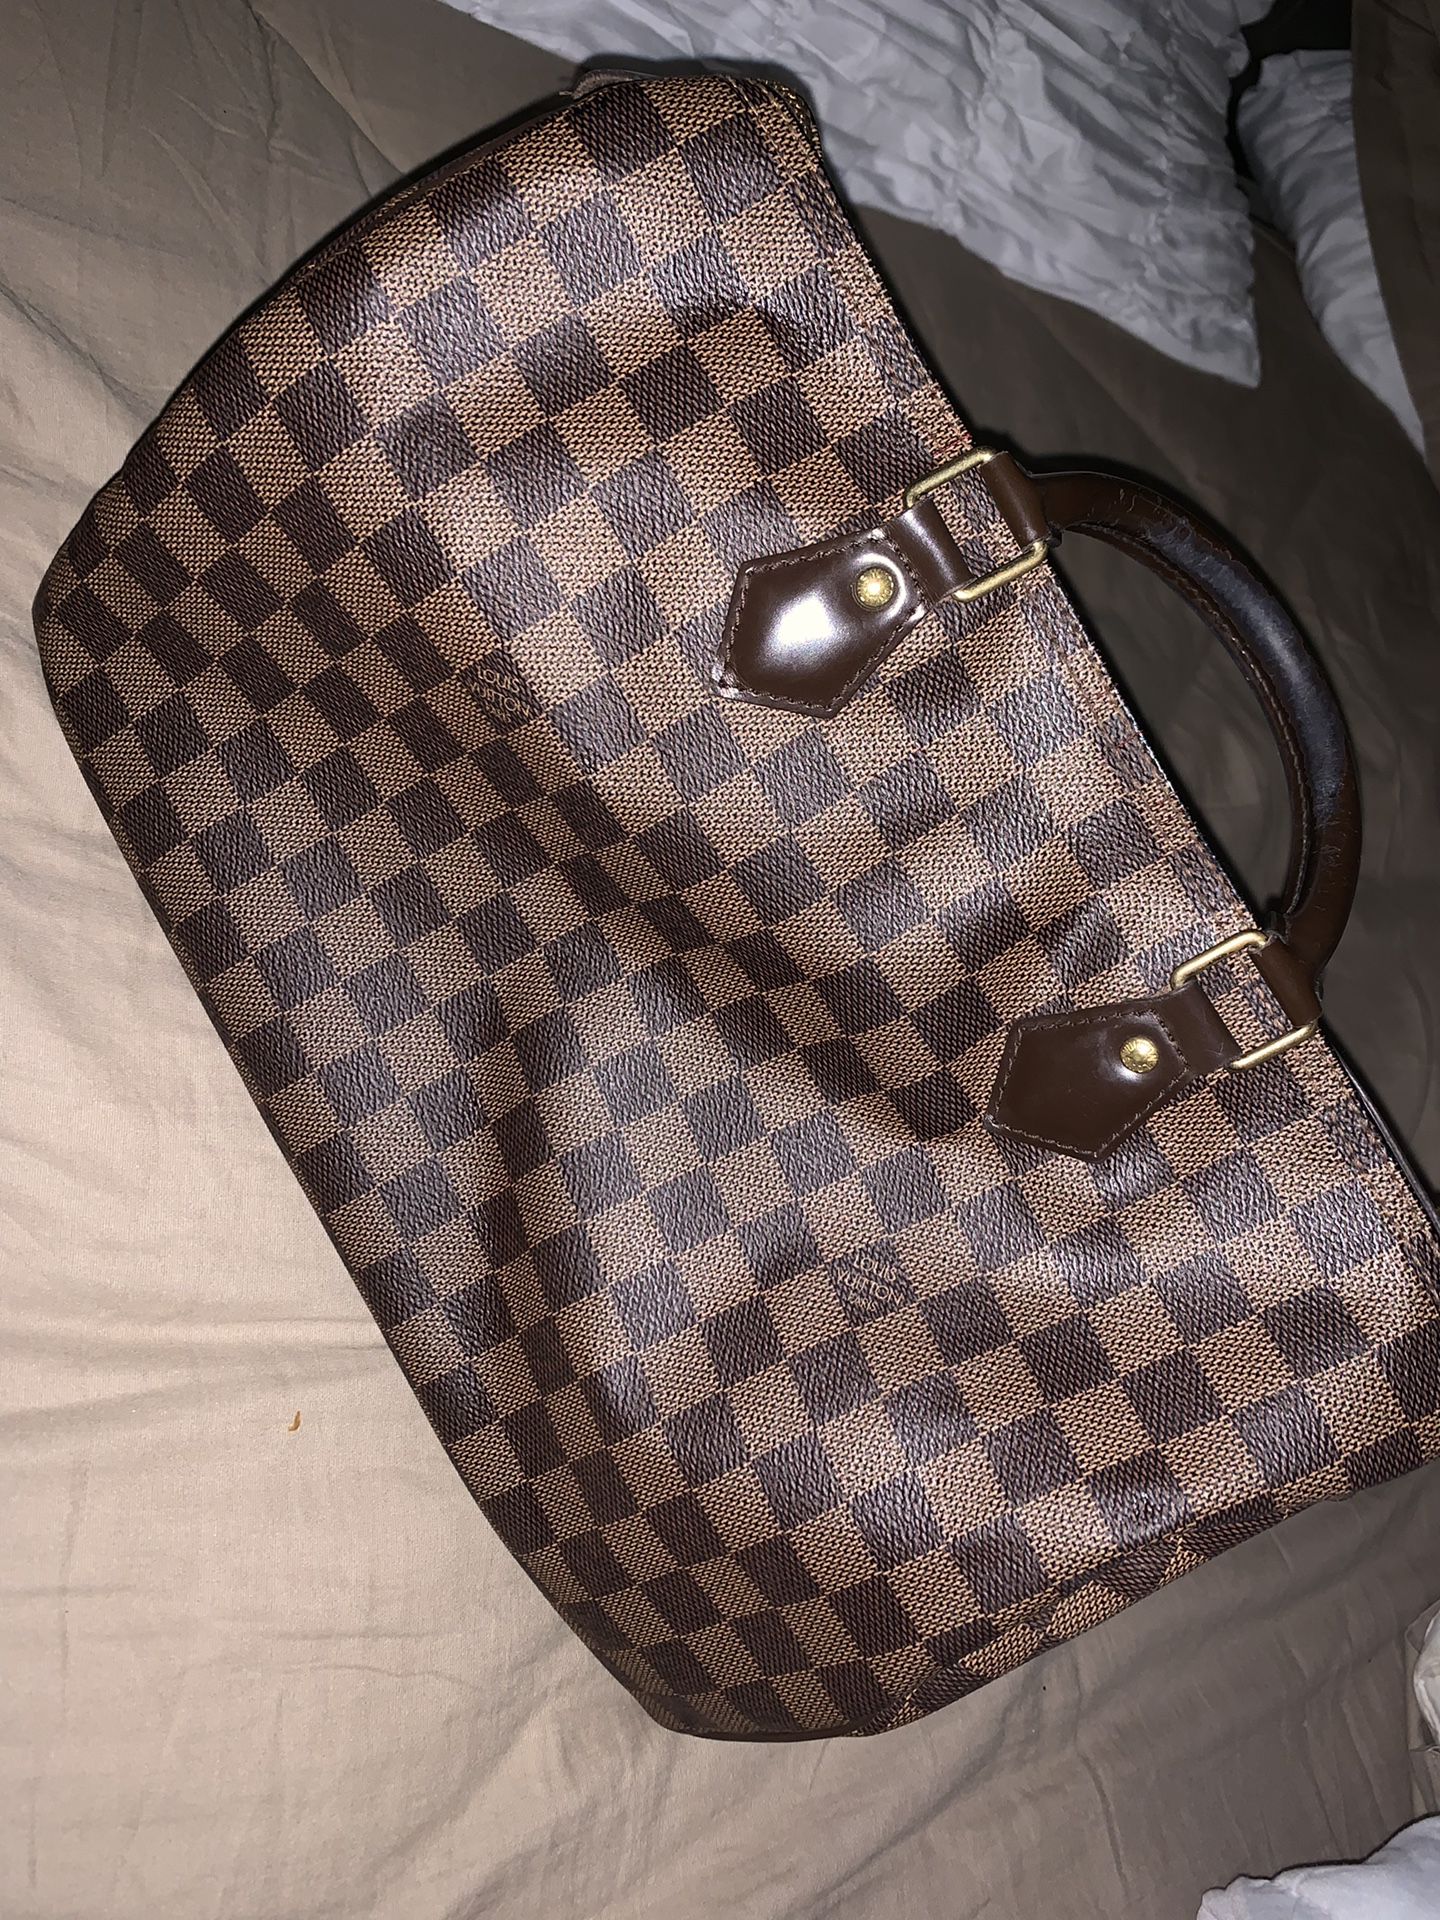 Authentic Louis Vuitton Shoulder Bag for Sale in Homestead, FL